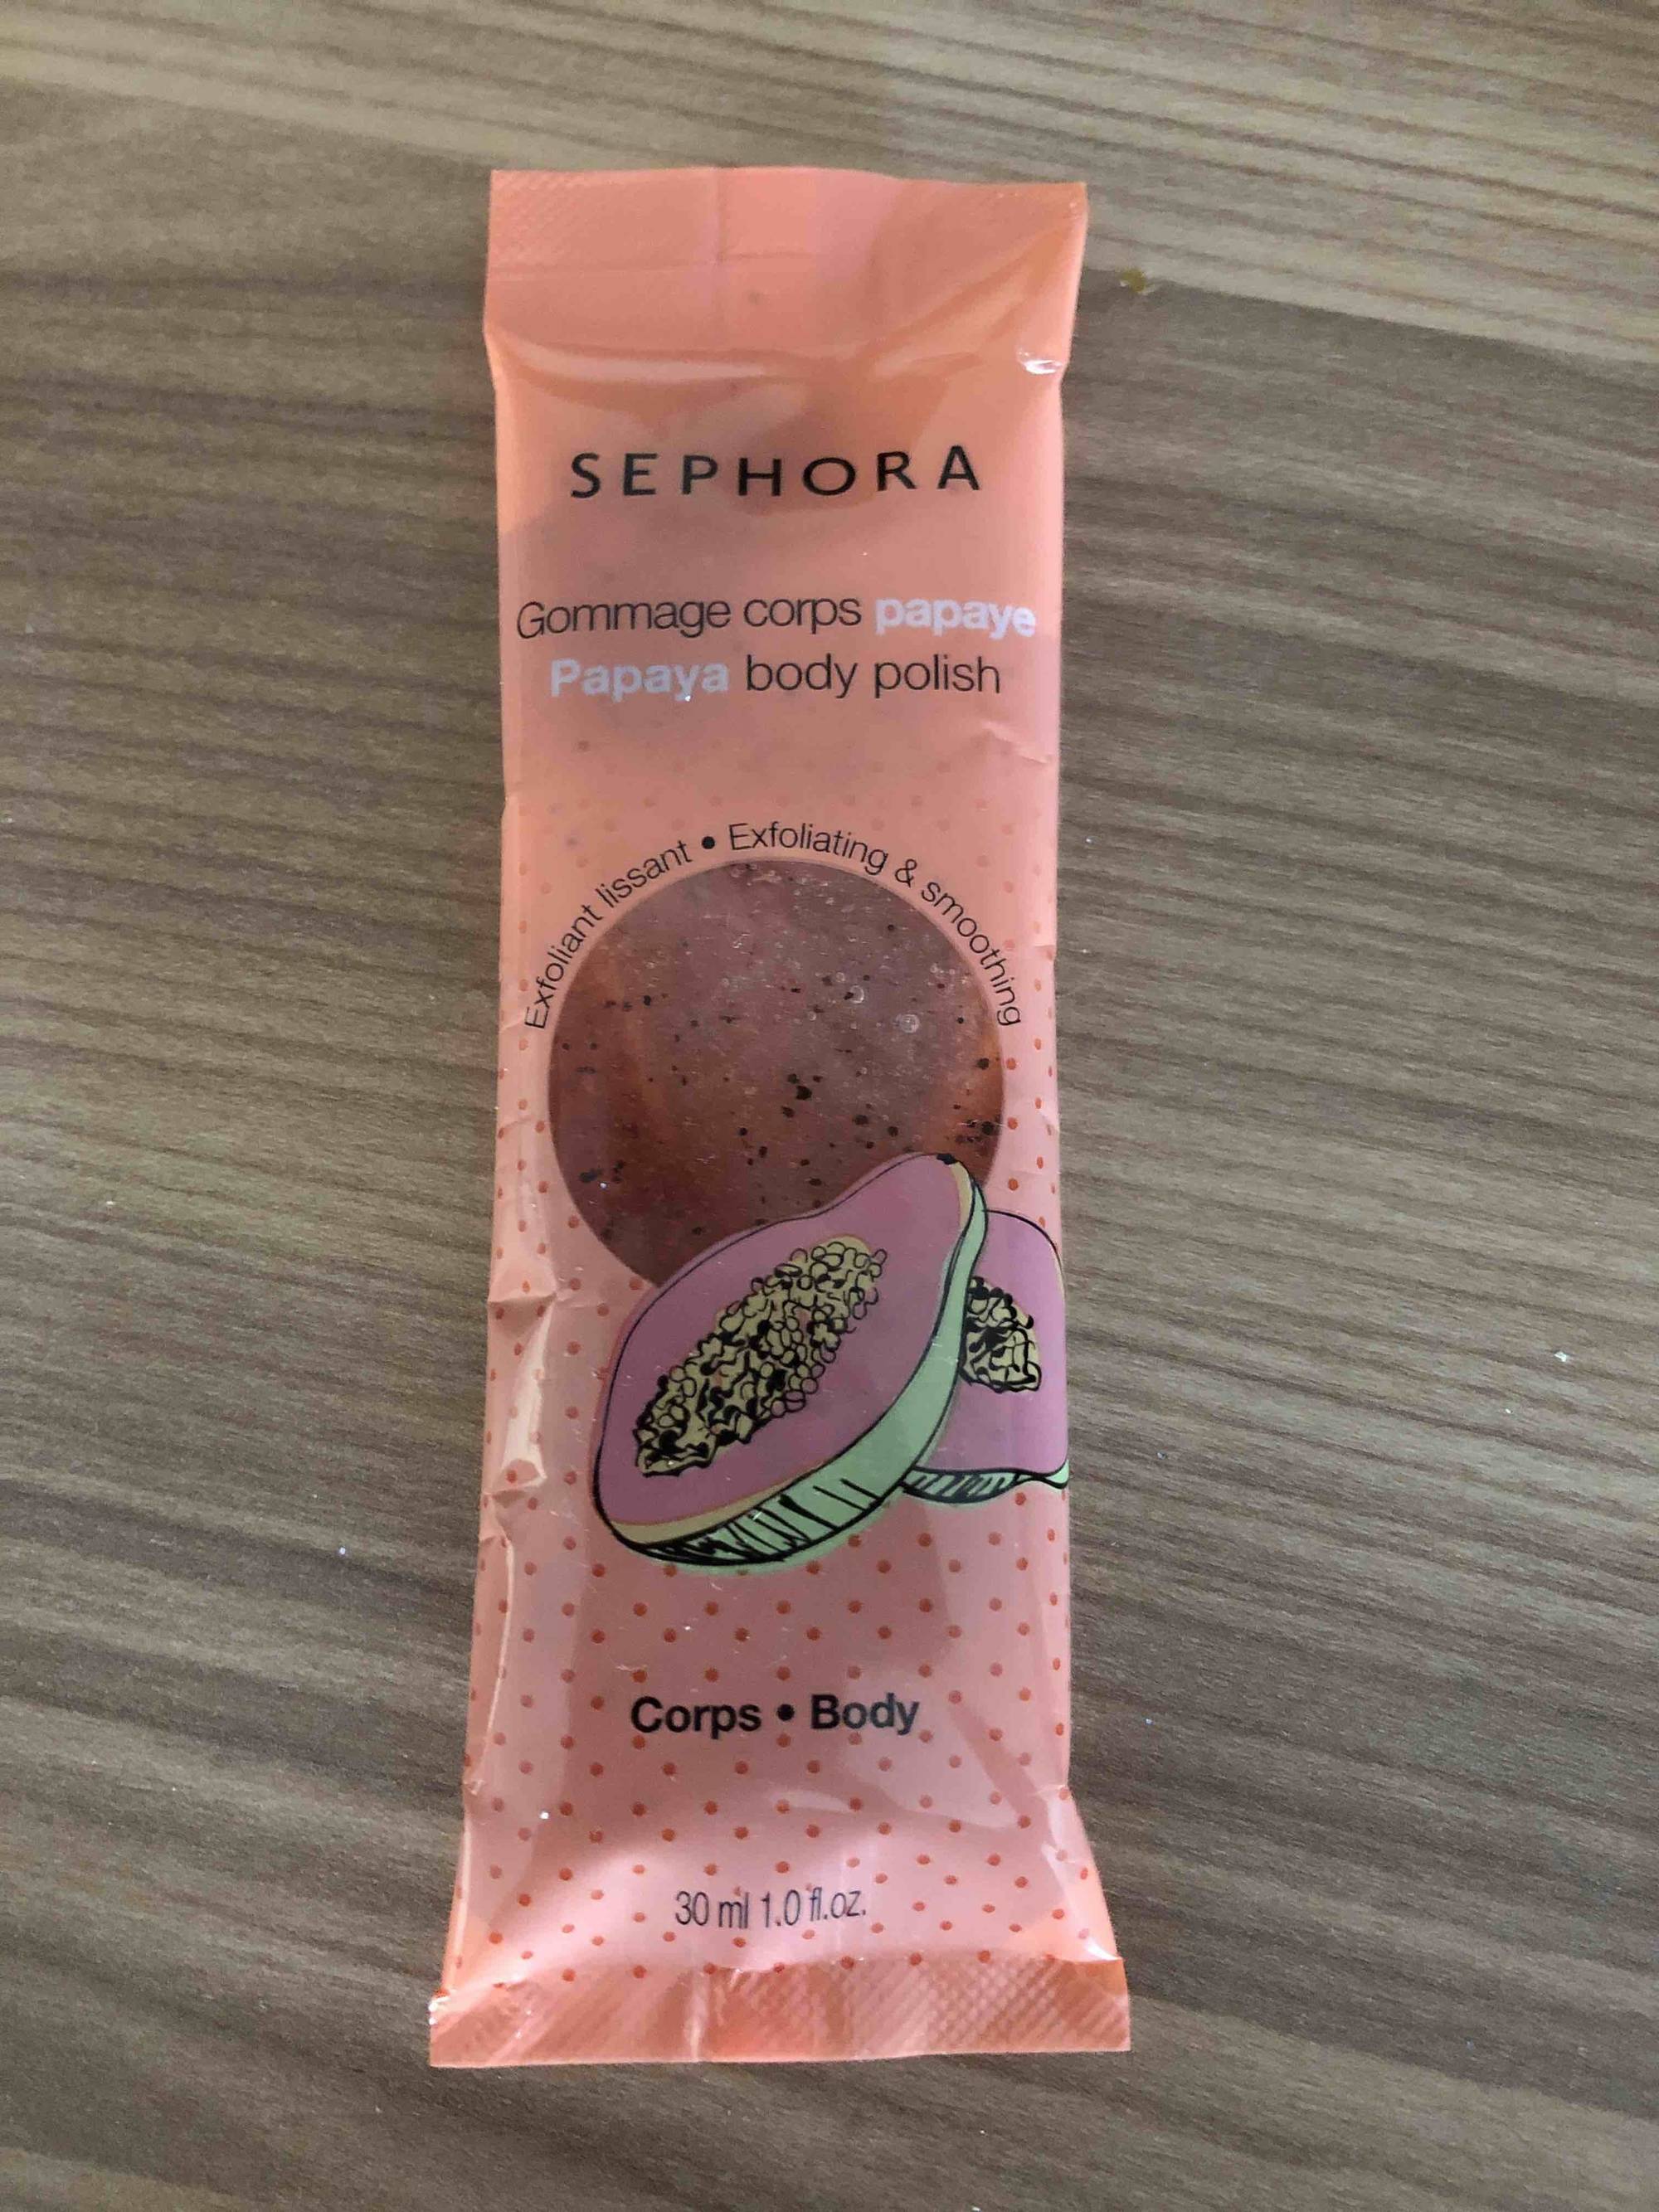 SEPHORA - Gommage corps papaye